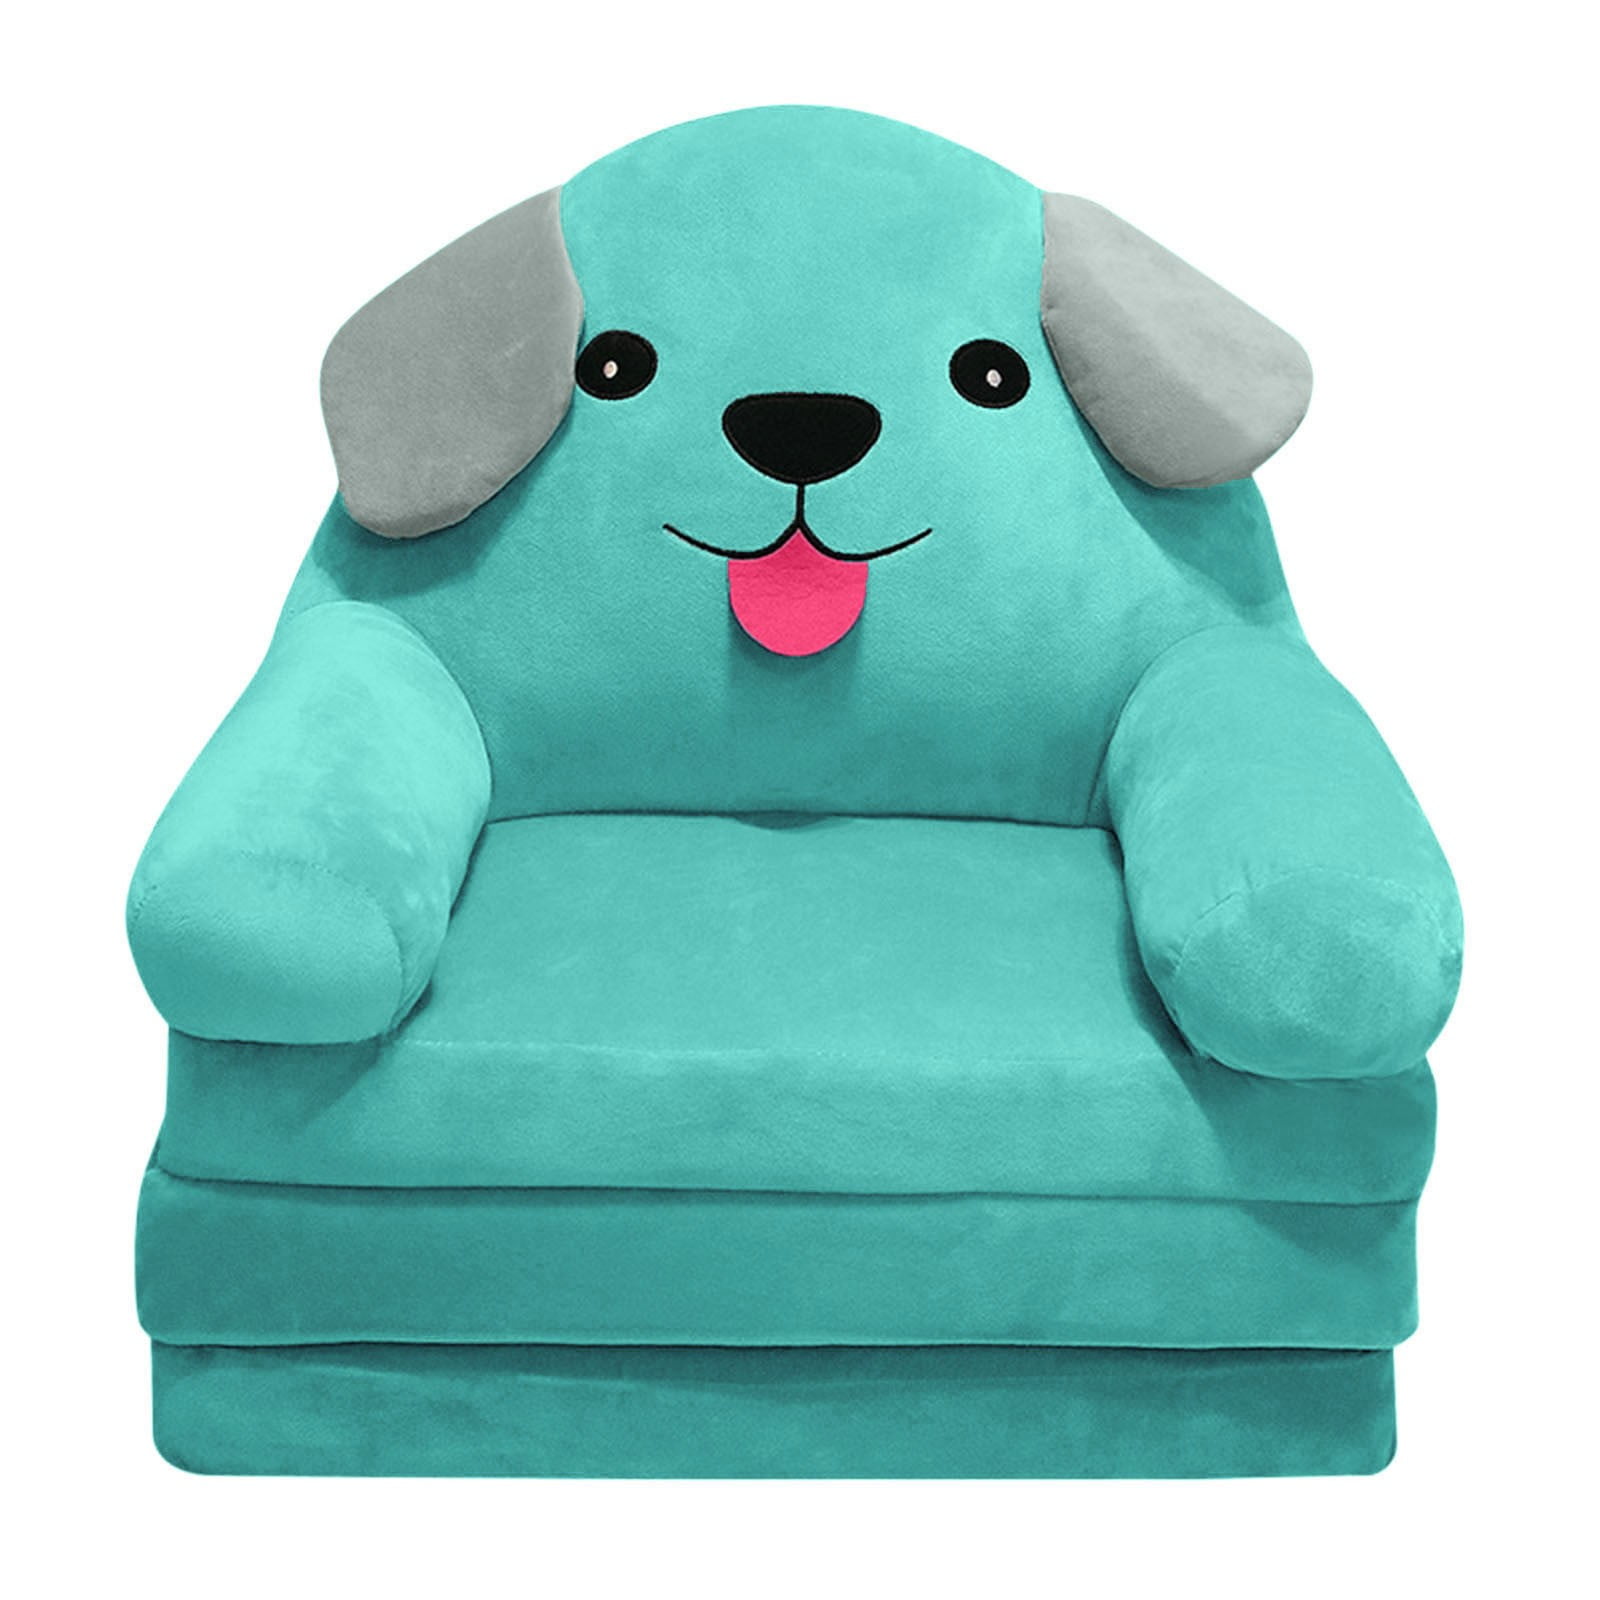 NEW Soft Pillow Seat Cushion Stuffed Small Plush Sofa Indoor Floor Home  Chair Decor Winter Children Gift